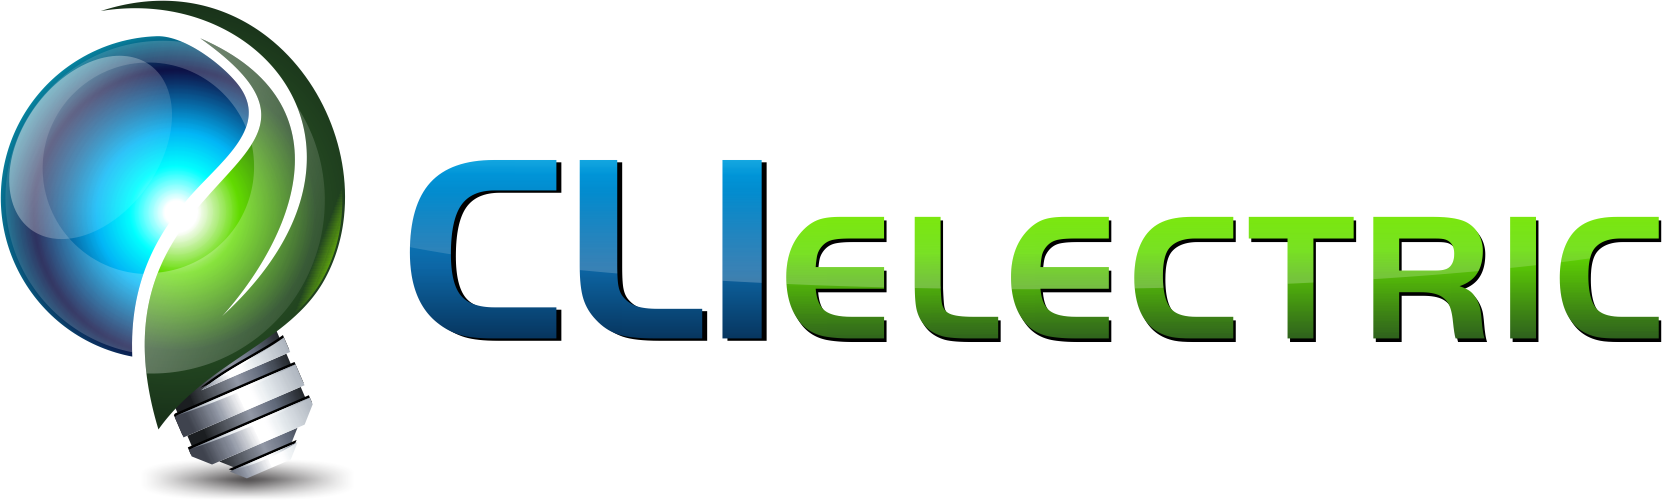 Cli Electric's logo